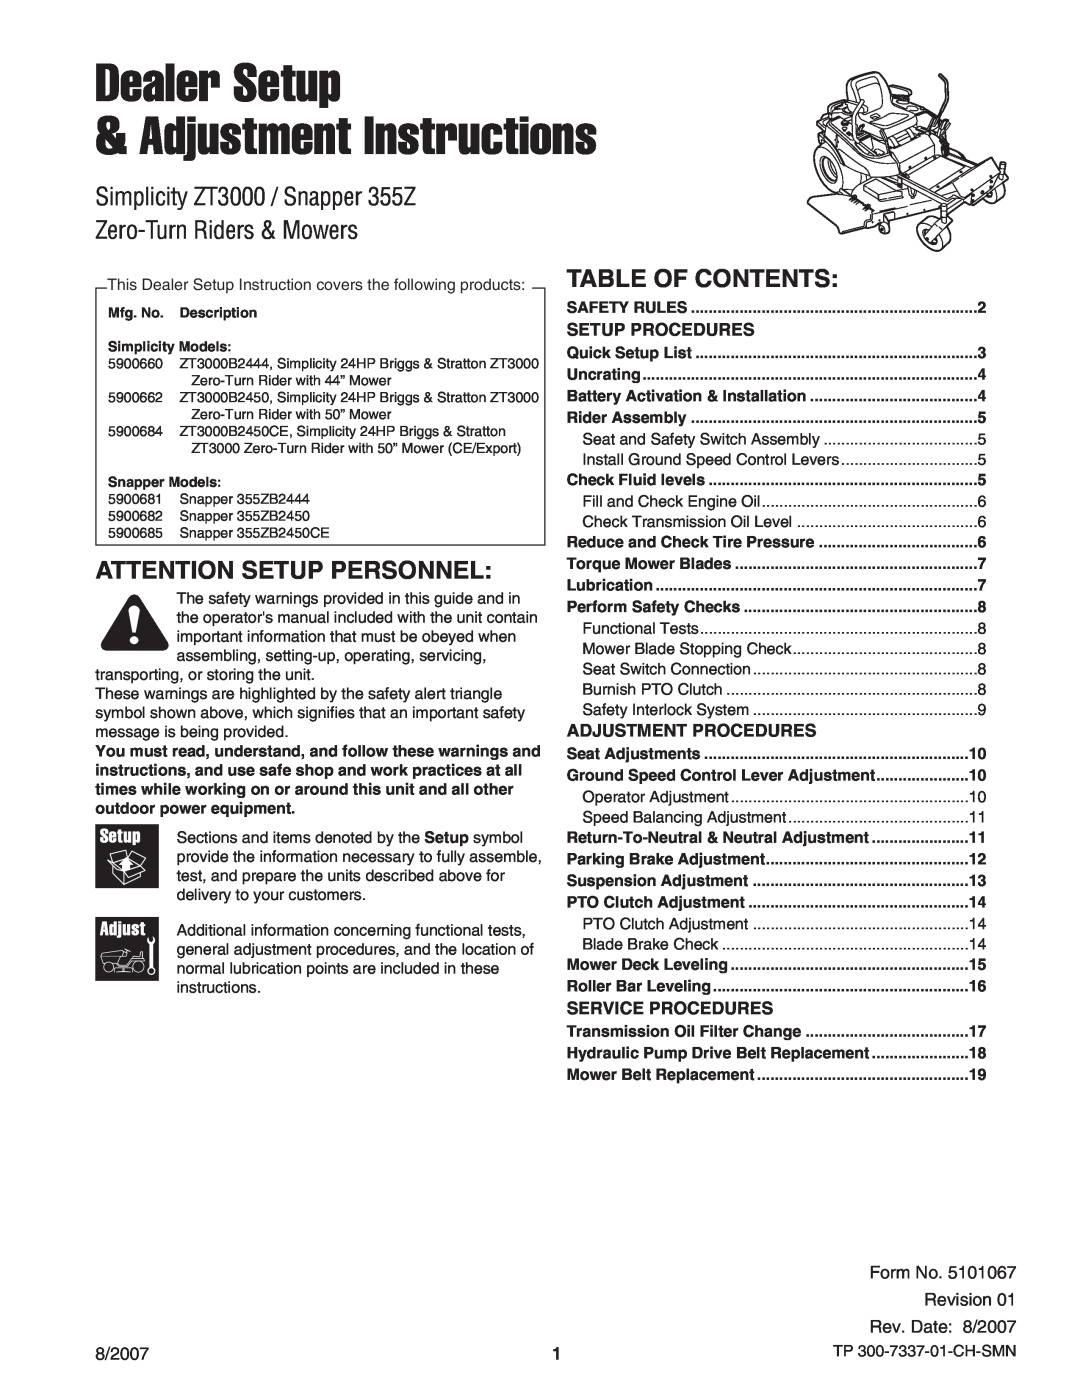 Snapper ZT3000 manual Attention Setup Personnel, Table Of Contents, Dealer Setup Adjustment Instructions 